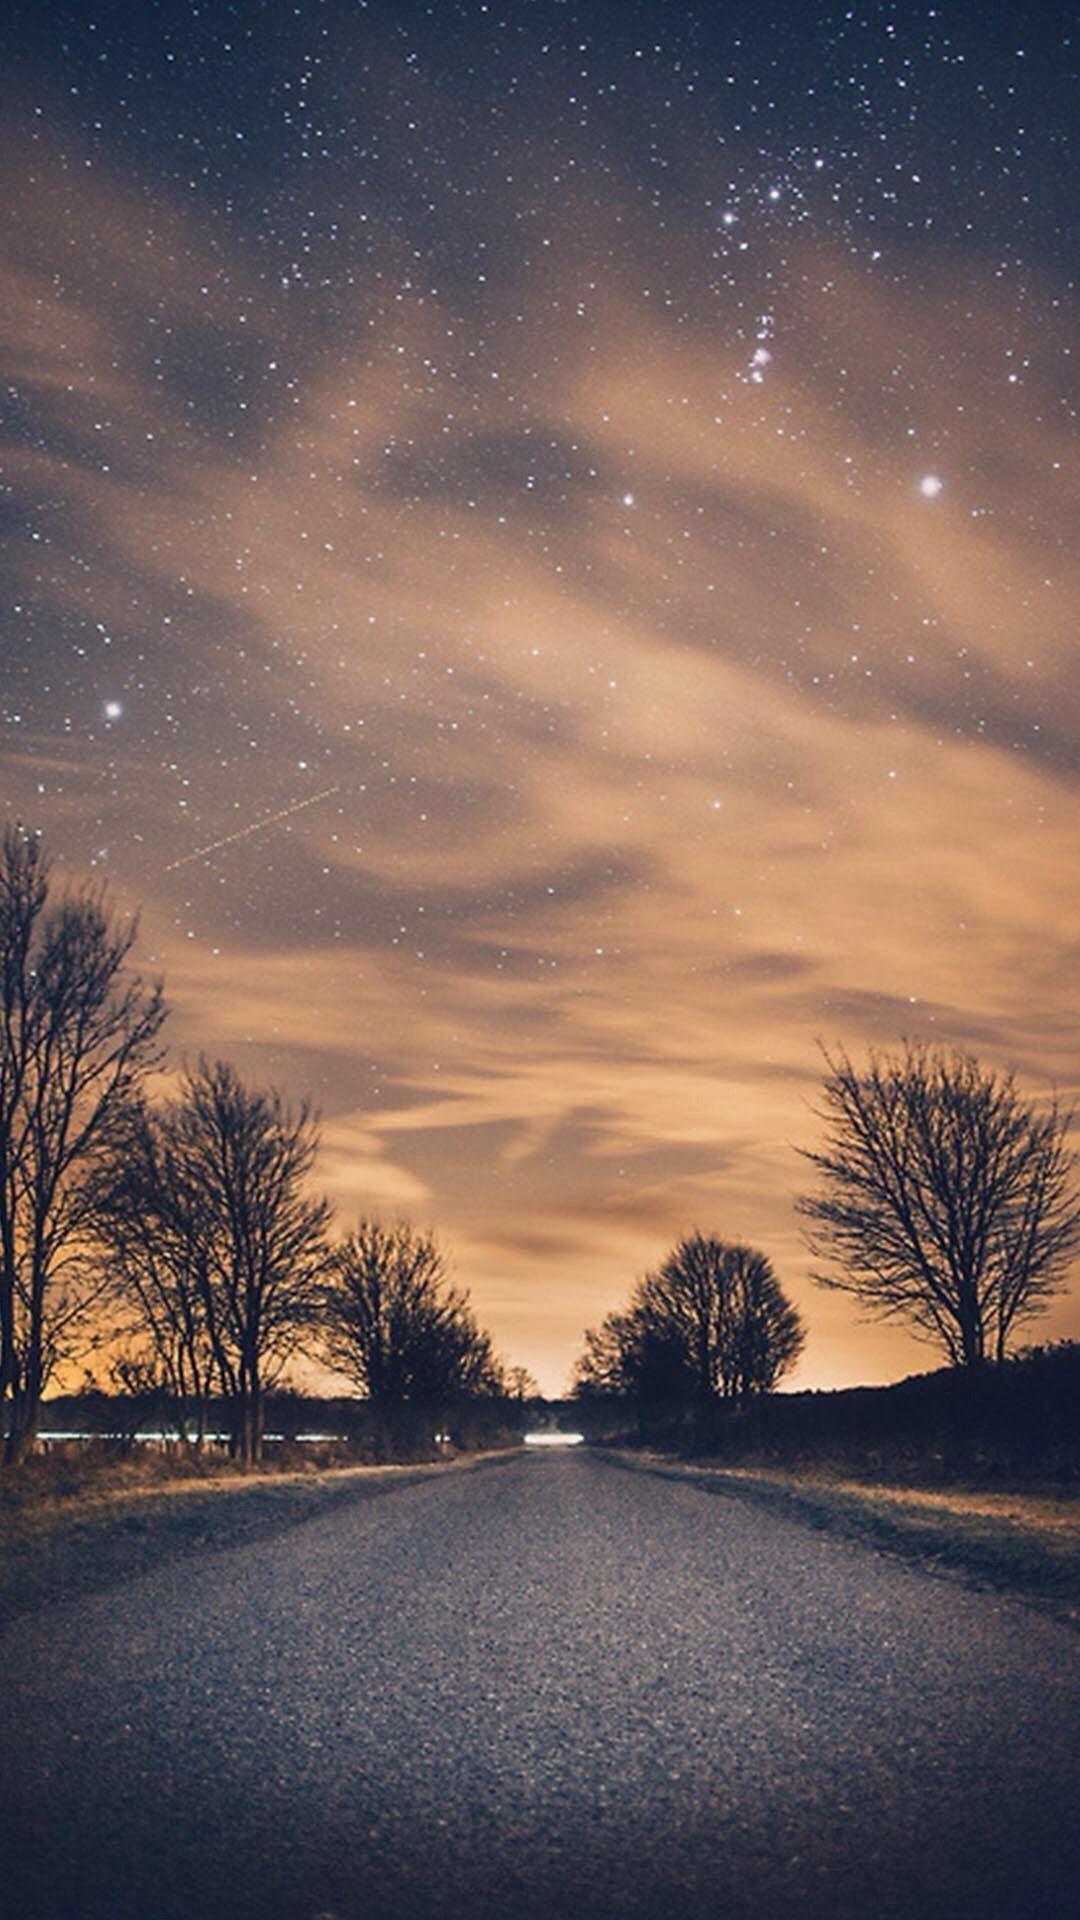 Nature Night Shiny Road Endless Tree Roadside #iPhone #wallpaper